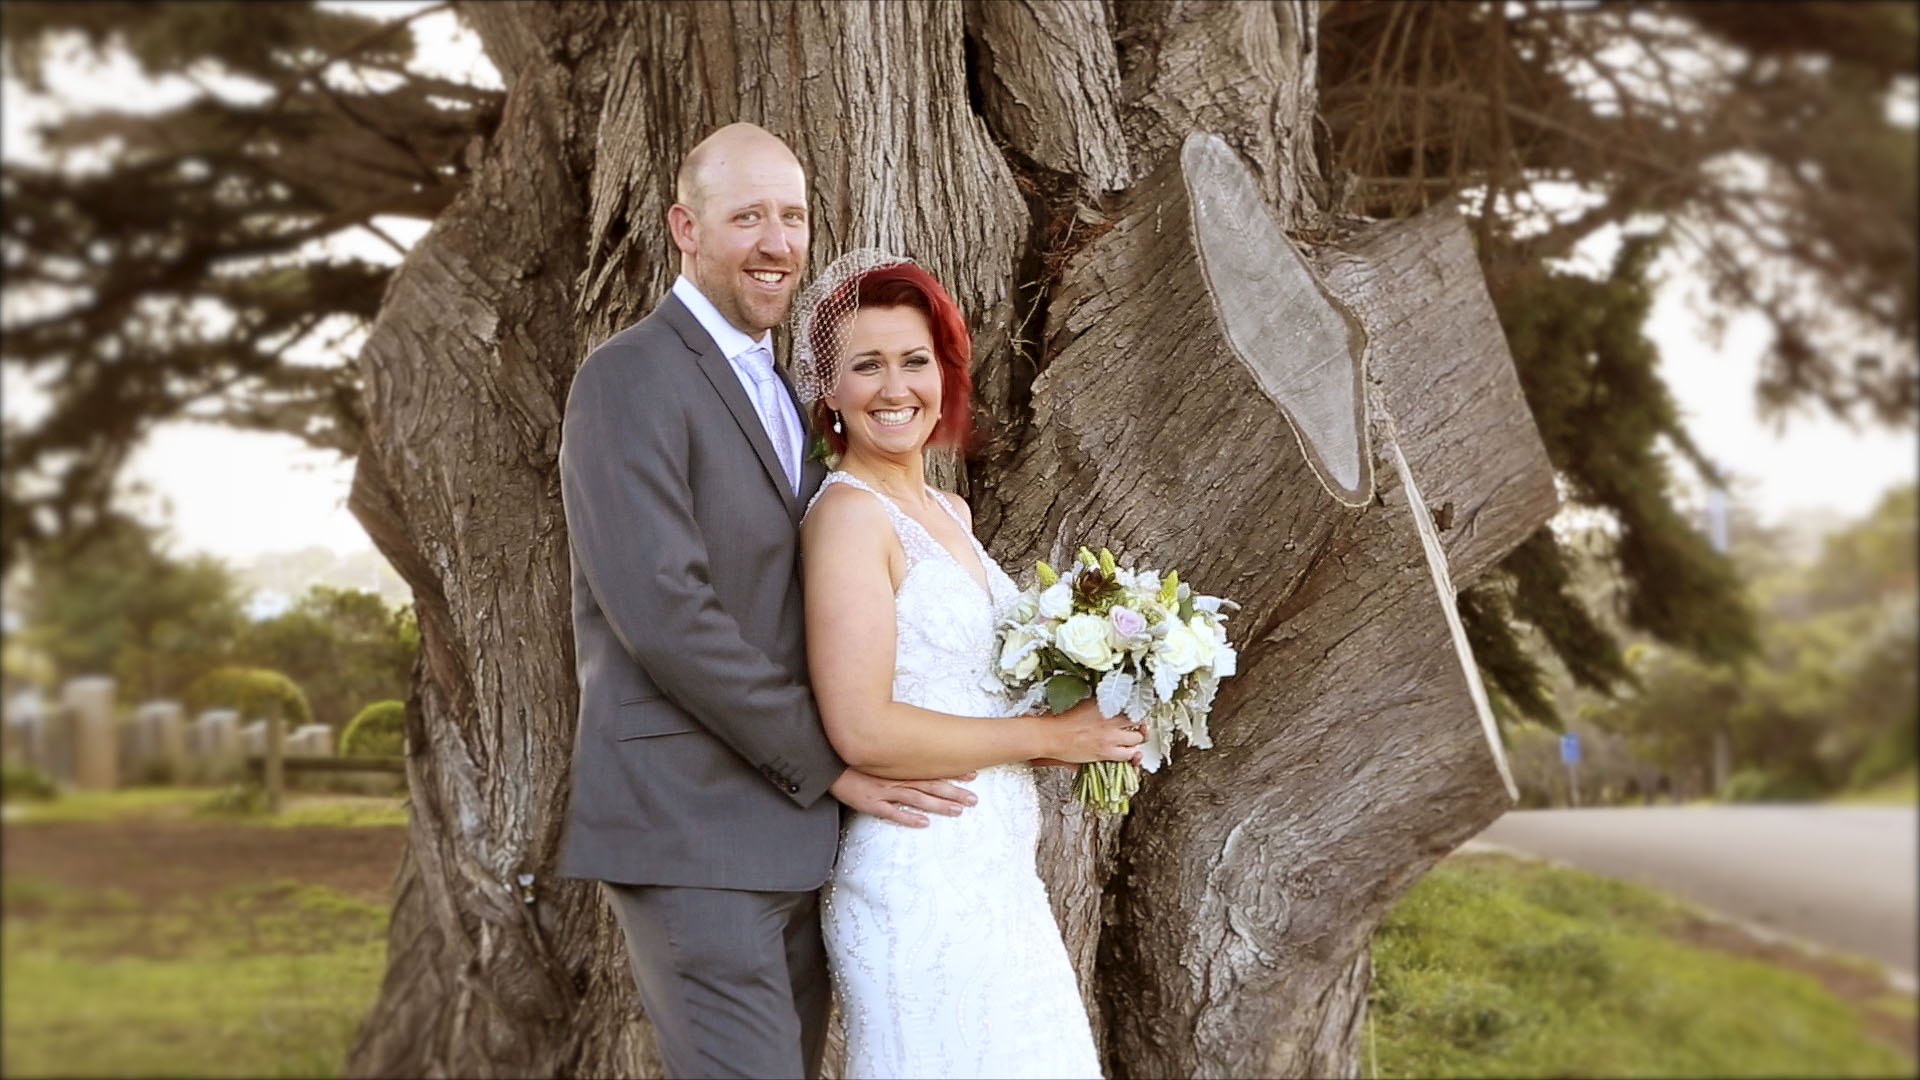 Michelle & Rhys wedding Sorrento, Mornington Peninsula